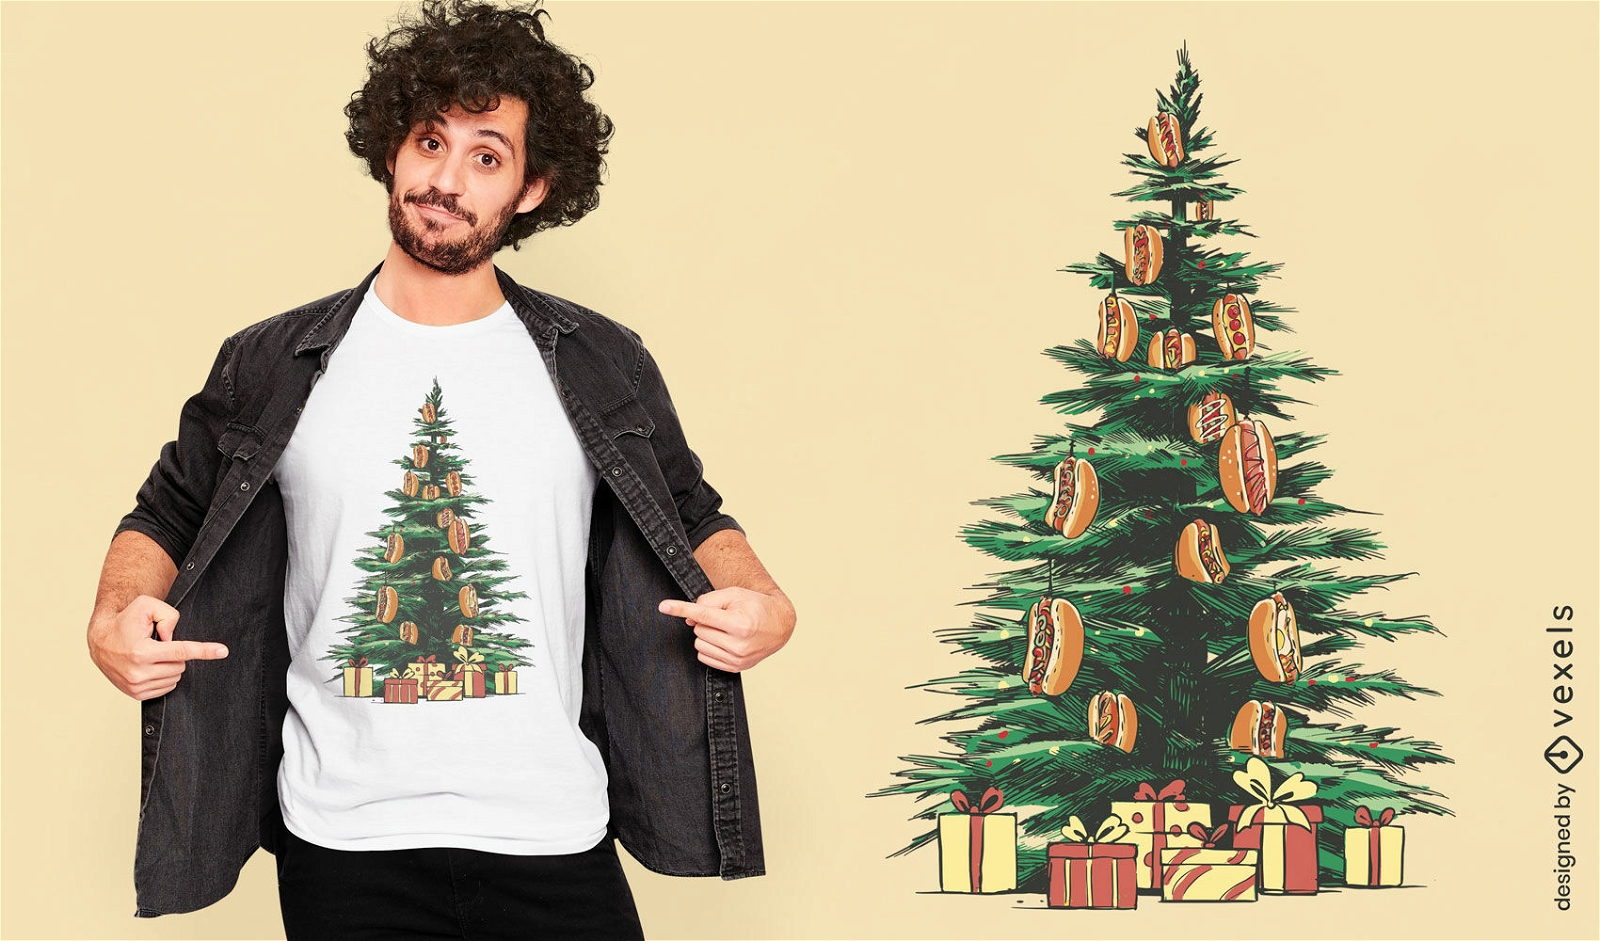 Hot dog christmas tree t-shirt design